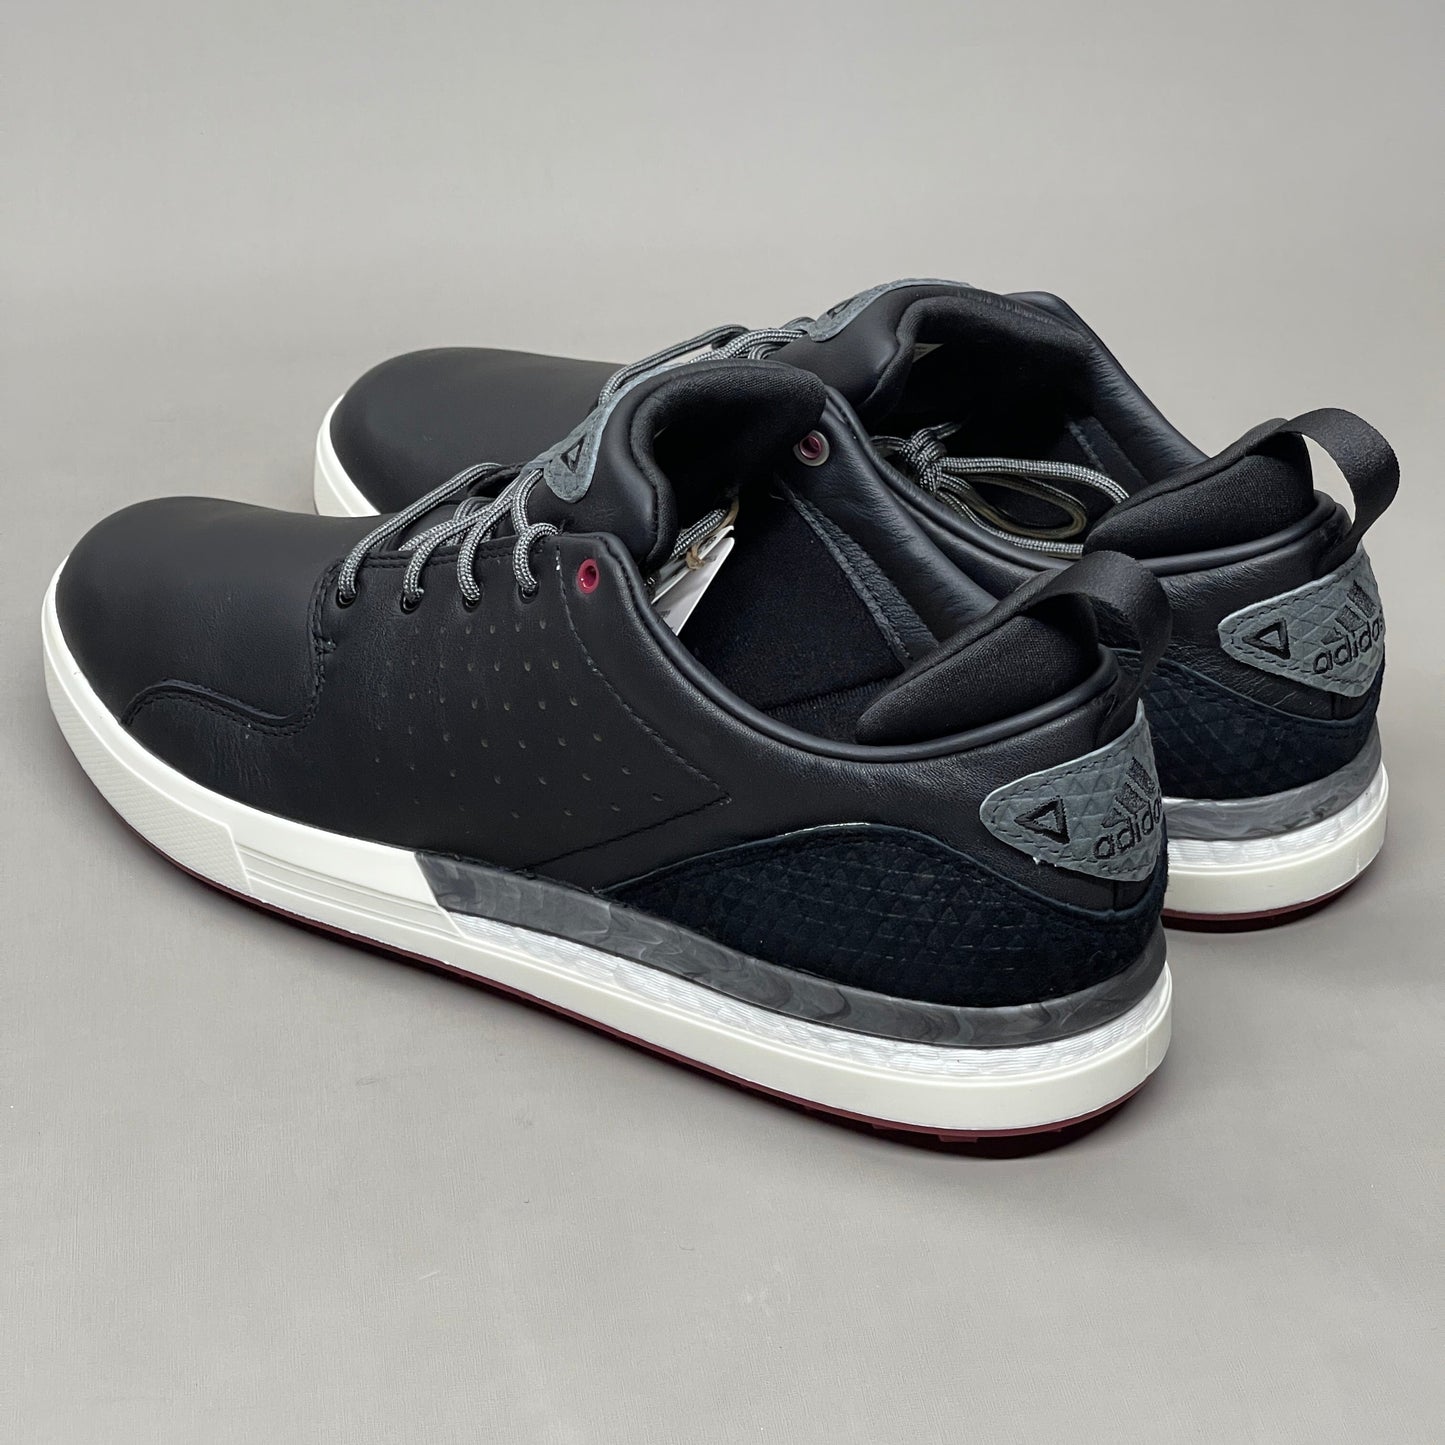 ADIDAS Golf Shoes Waterproof Flopshot Sz 9.5 Black / Grey / Burgundy GV9670 (New)